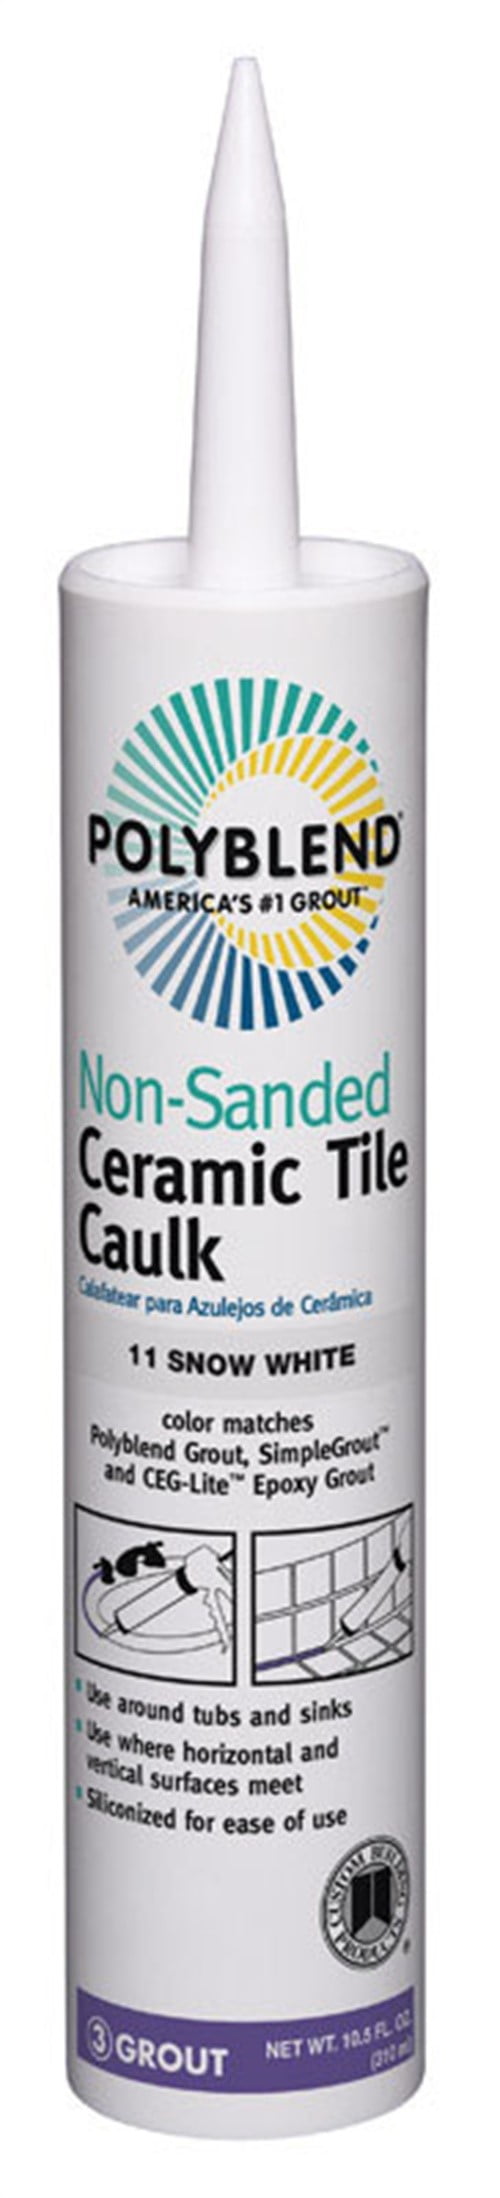 Polyblend Pc1110n 6 10 5 Oz Tile Caulk, Ceramic Tile Caulk